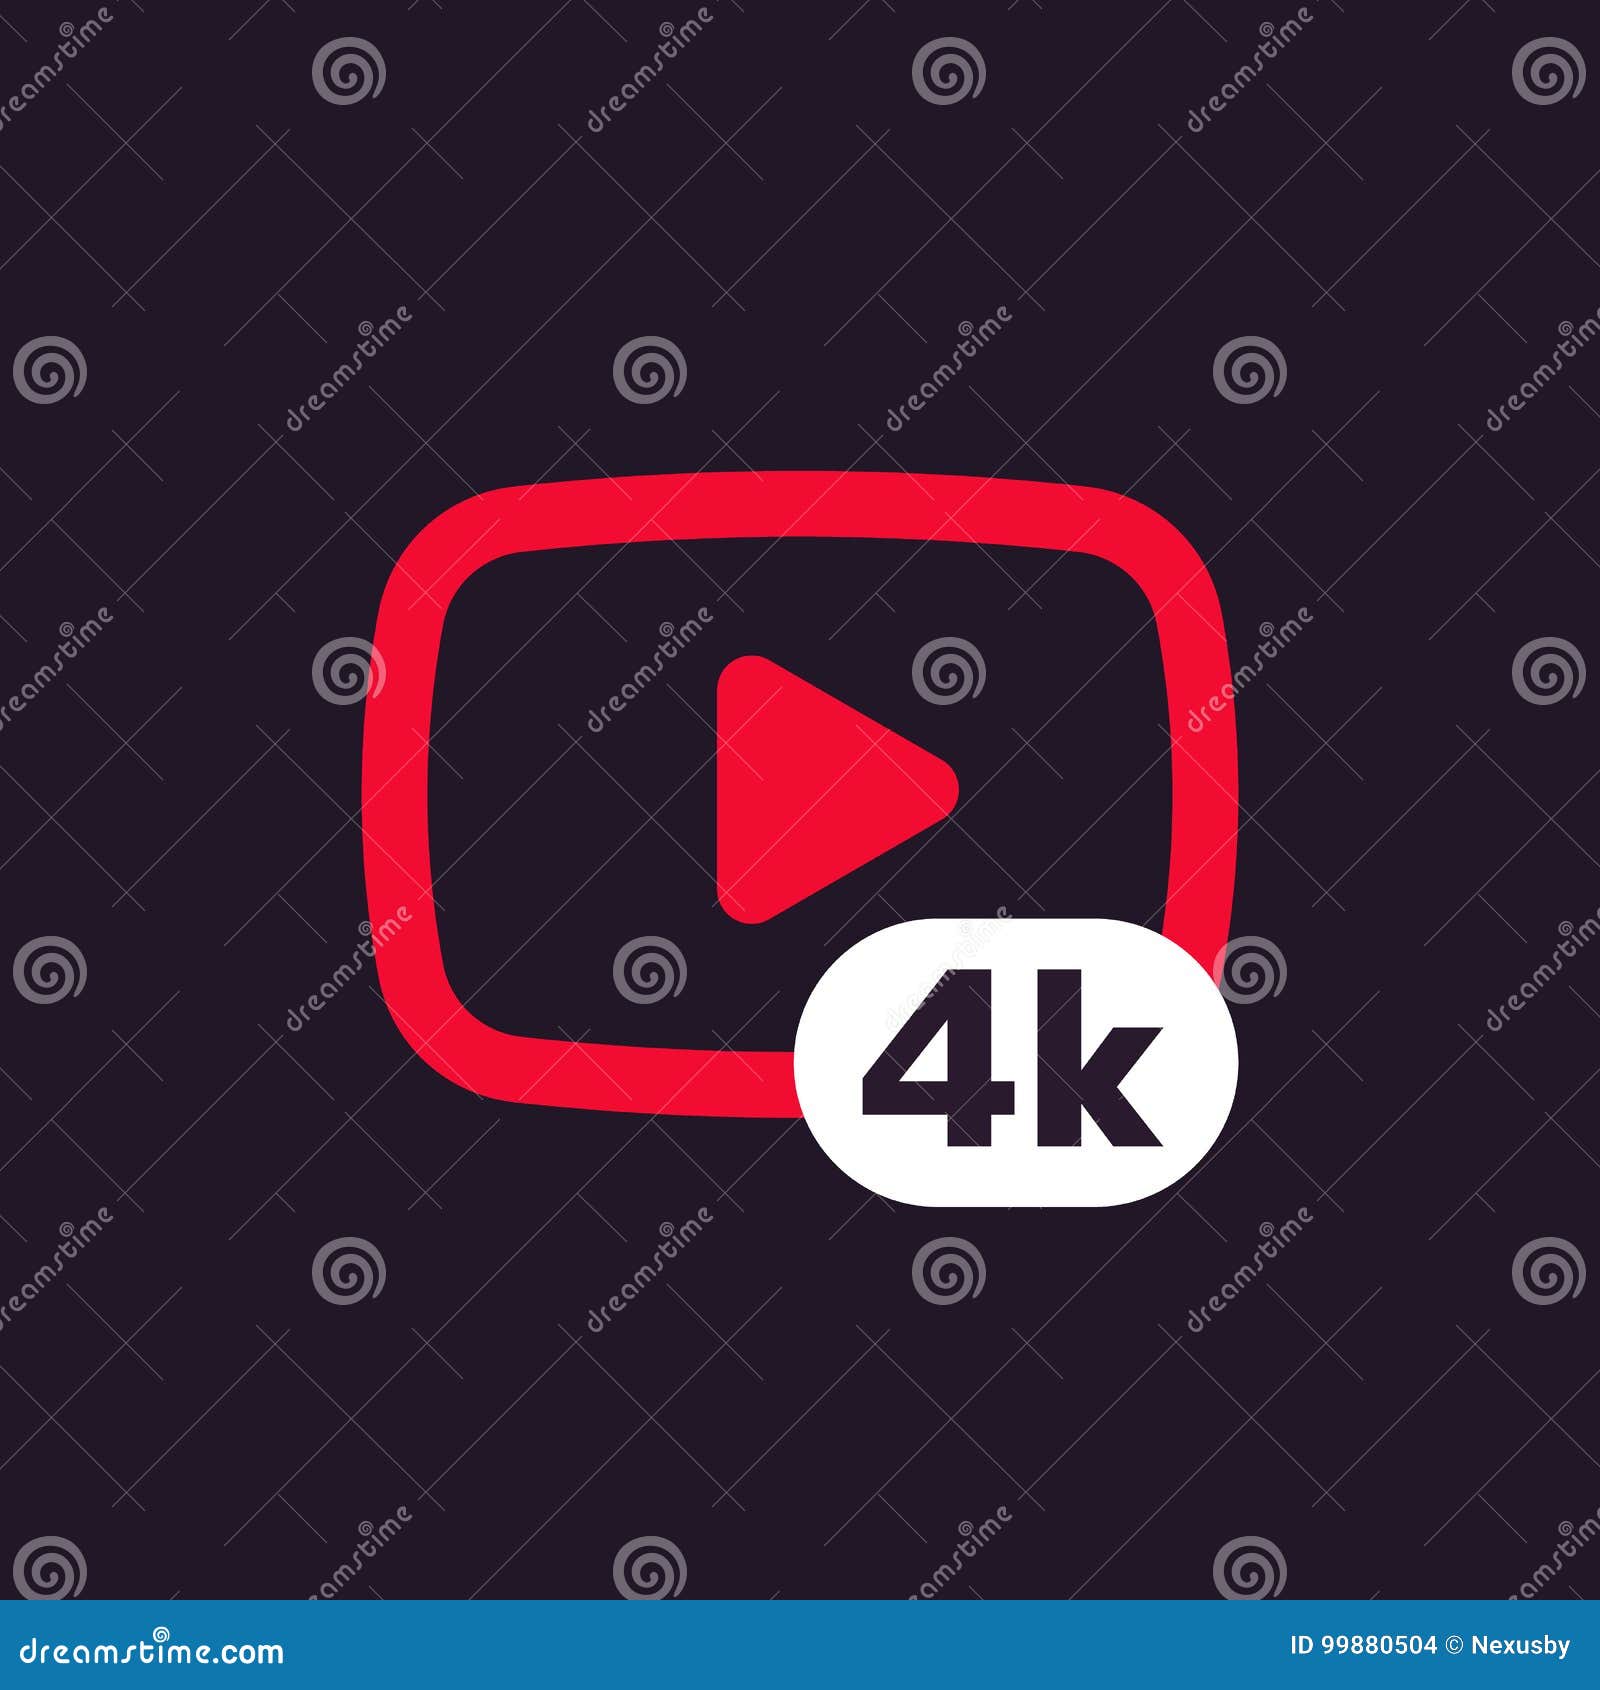 4k video icon